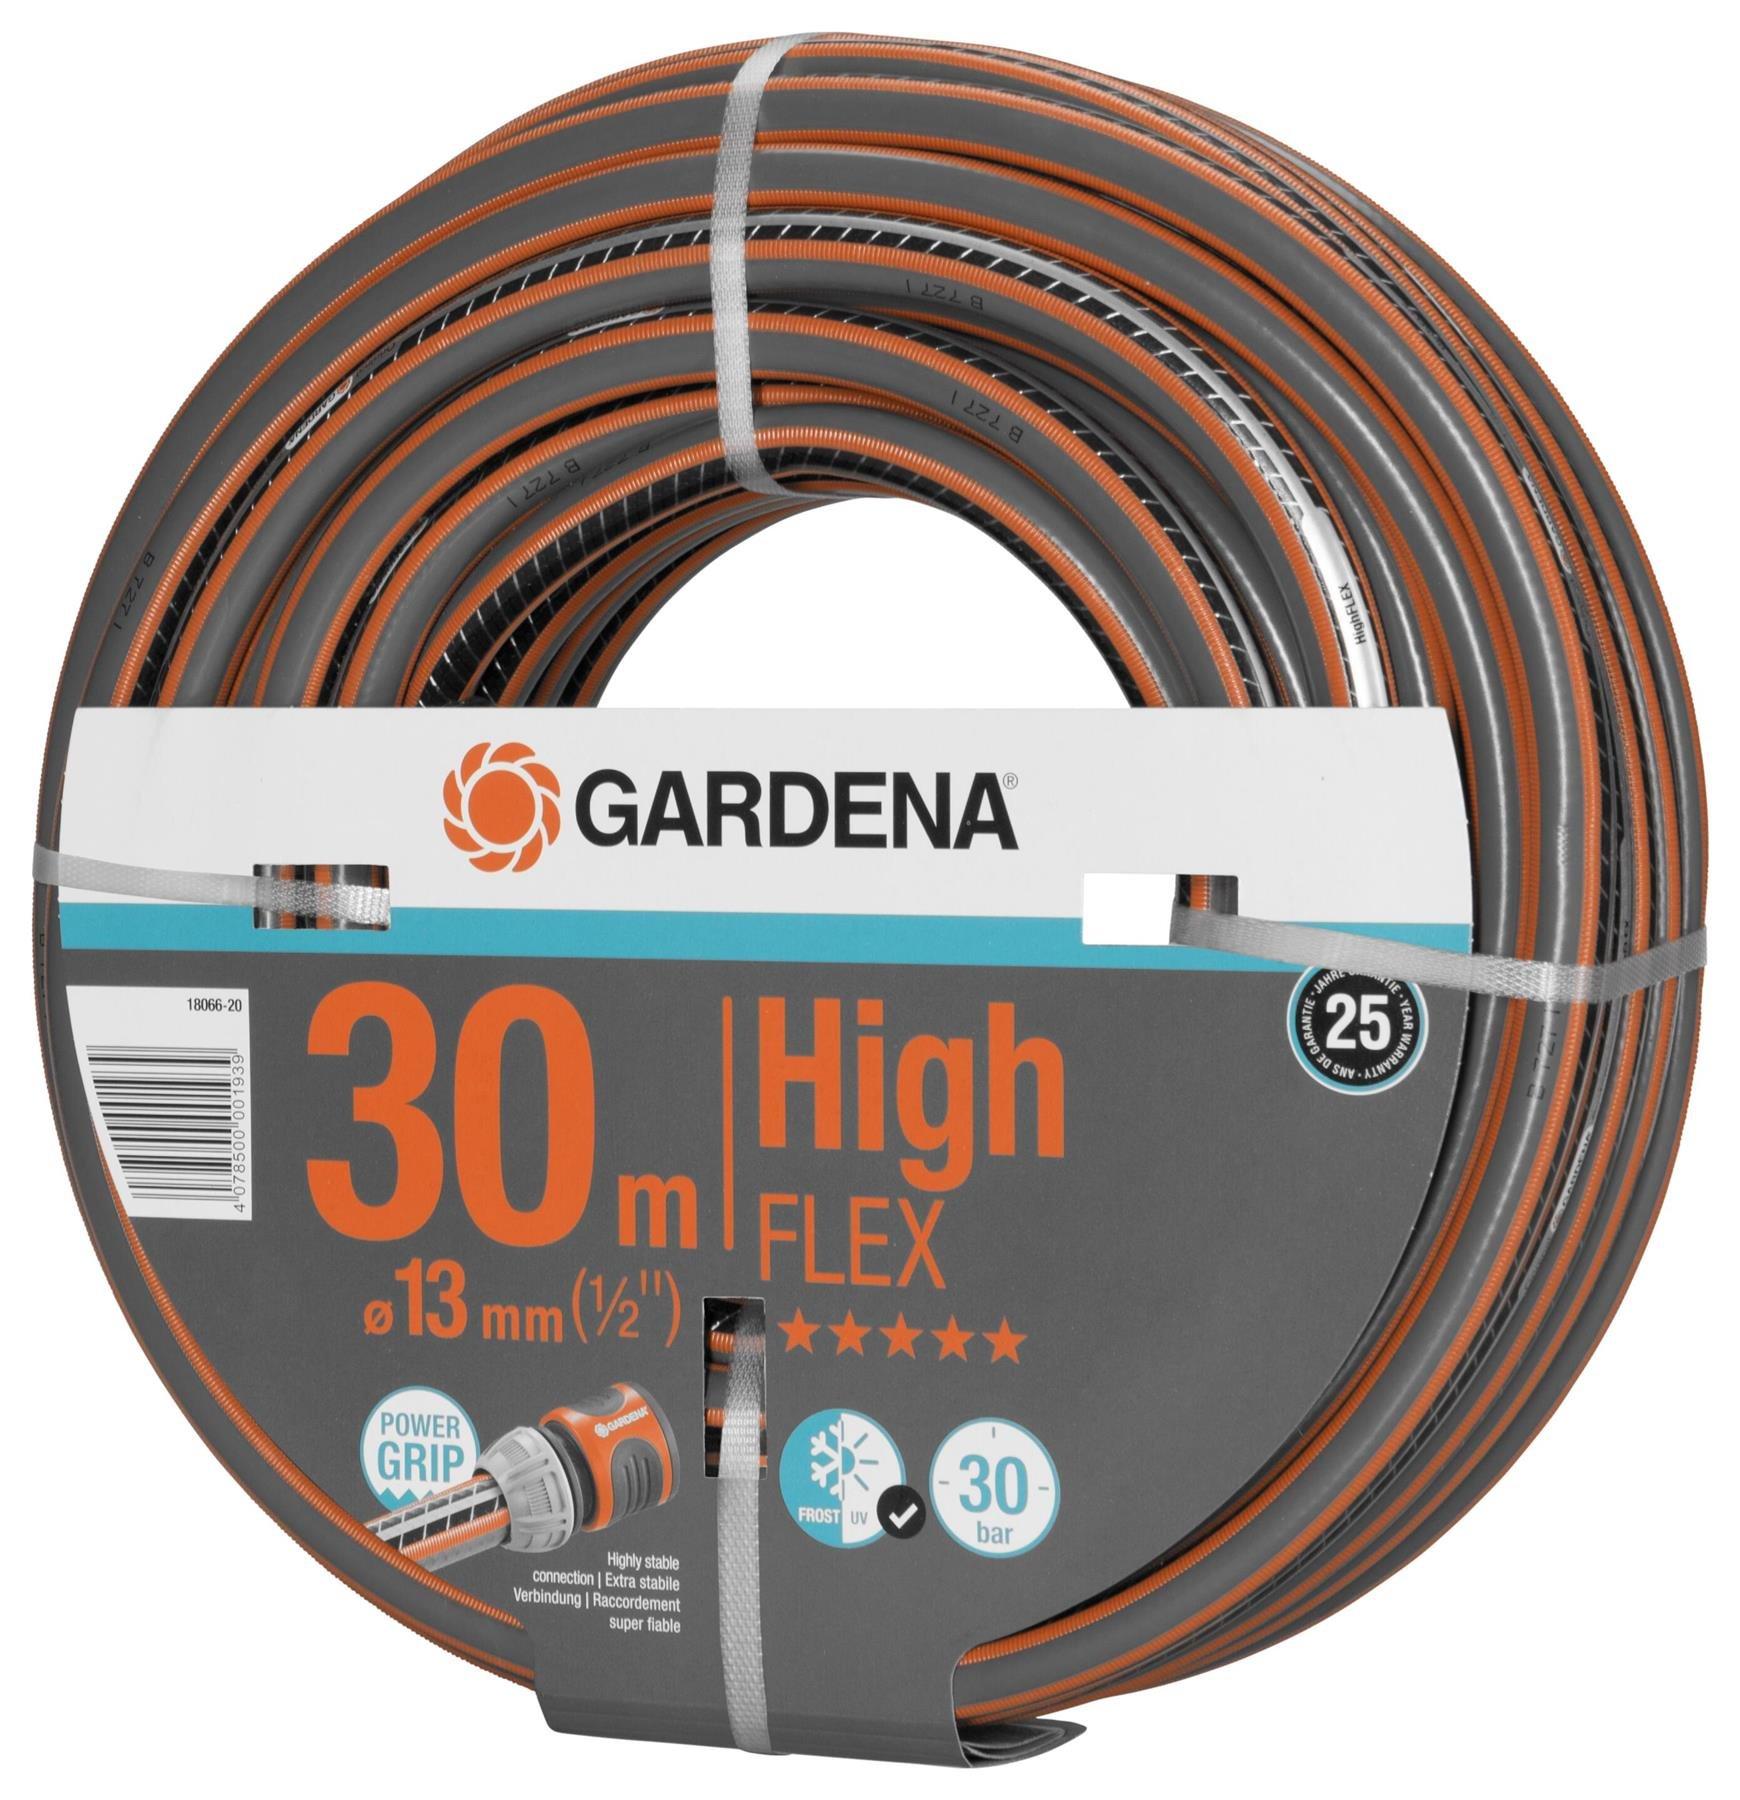 GARDENA Comfort HighFLEX Garden Hose - 30 m